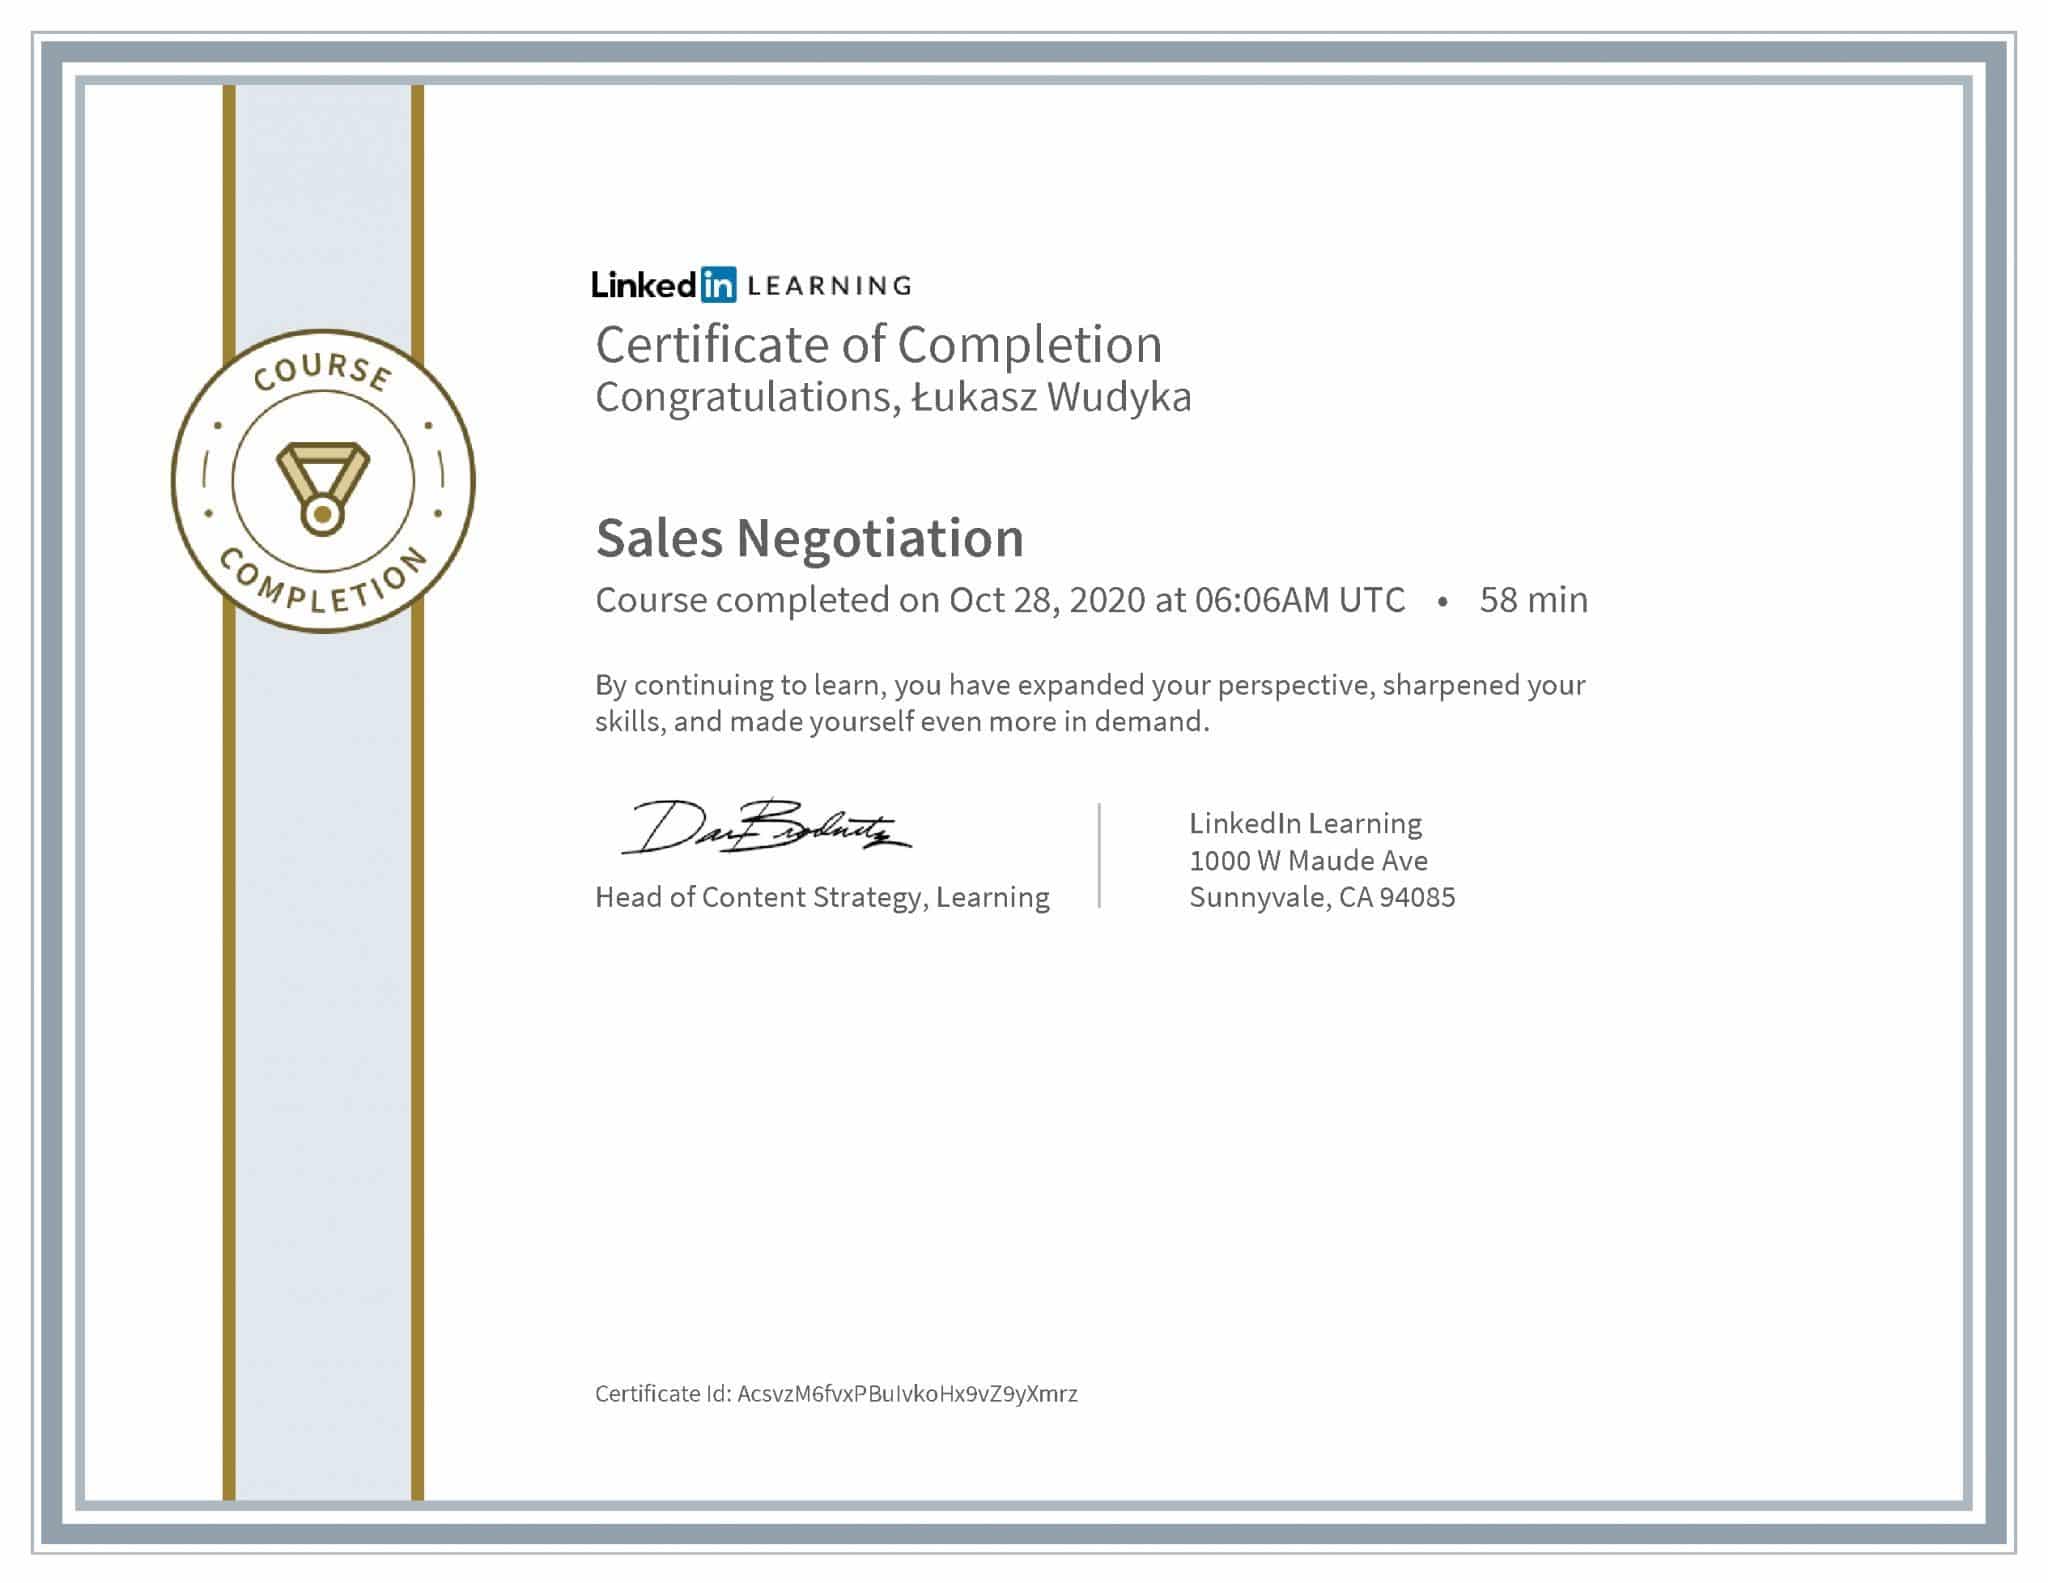 Łukasz Wudyka certyfikat LinkedIn Sales Negotiation